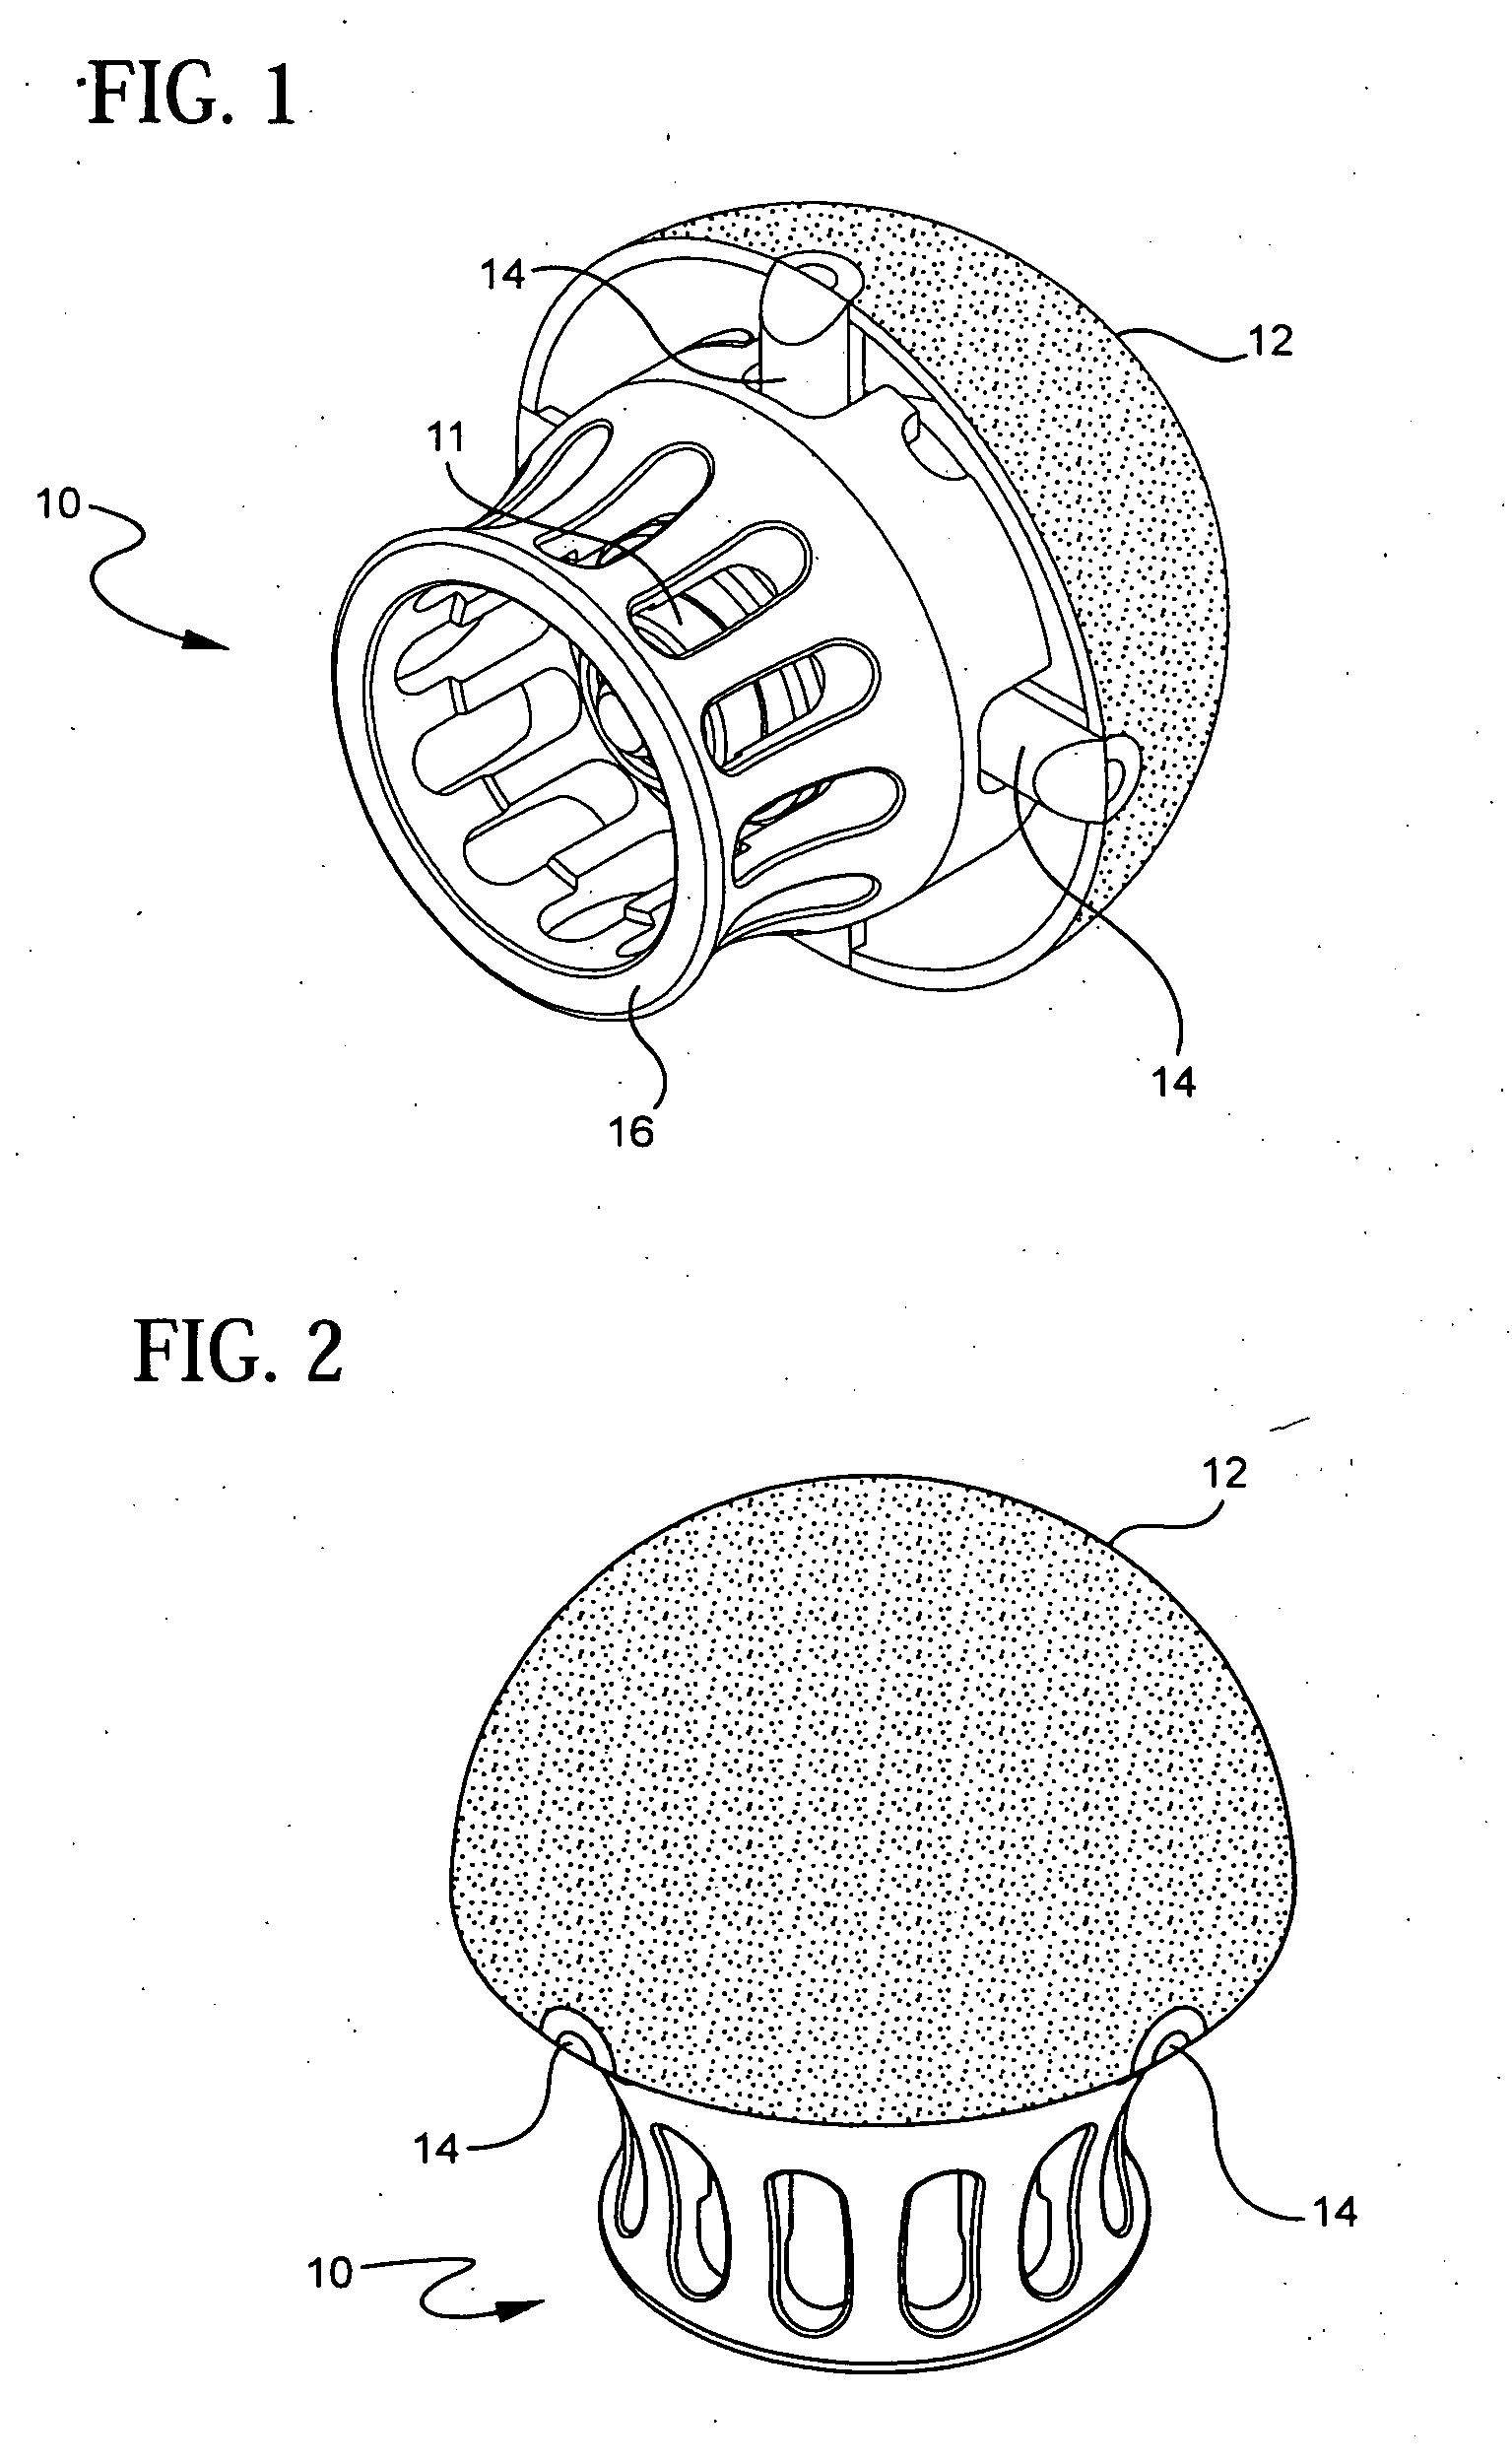 Acetabular reamer connection mechanism